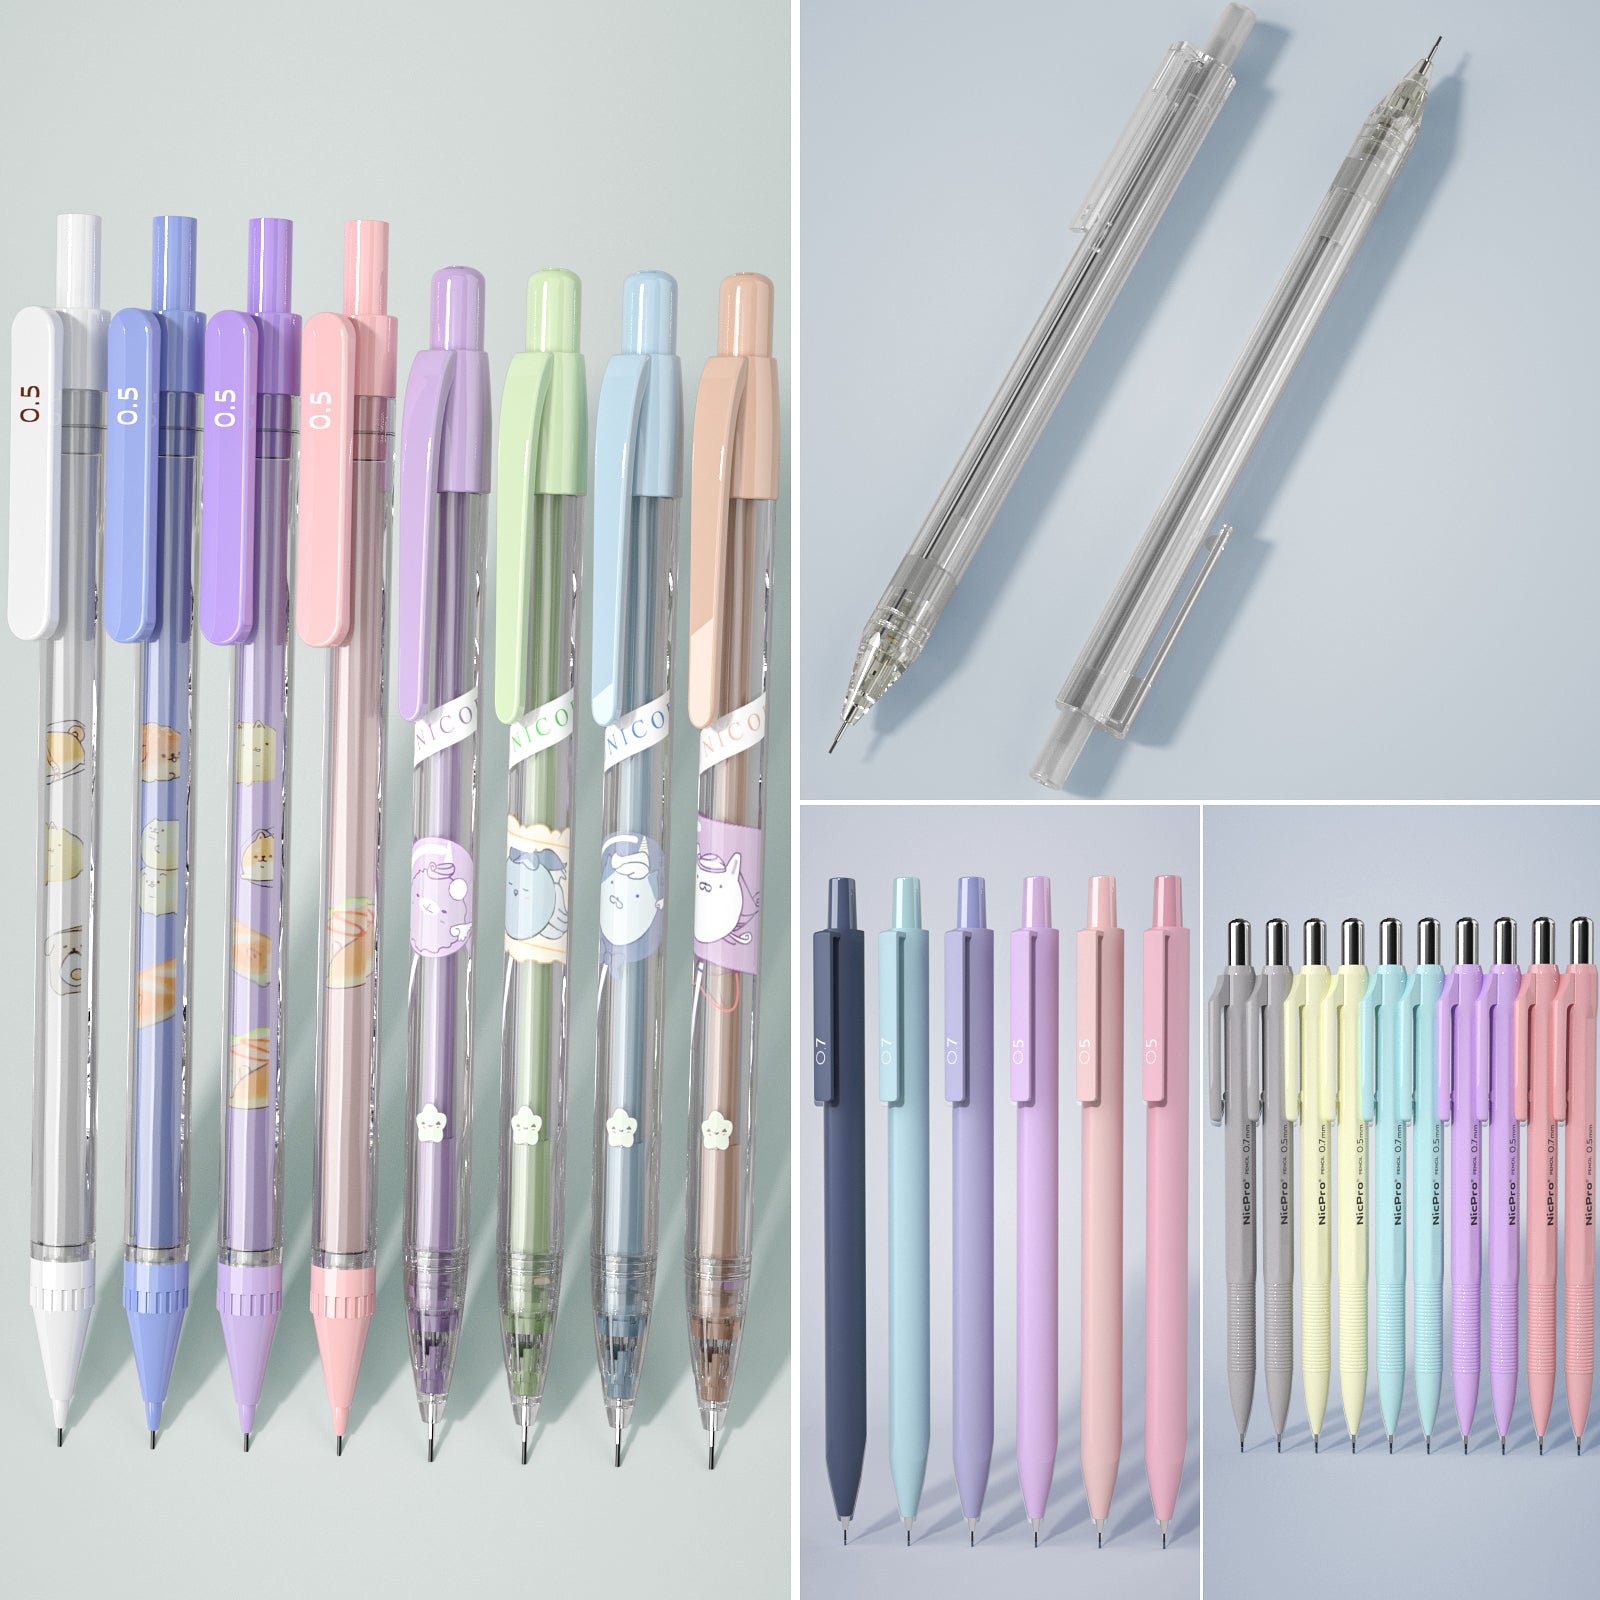 Ballpoint Pen Lead Pencil, Multicolor Eraser Refills